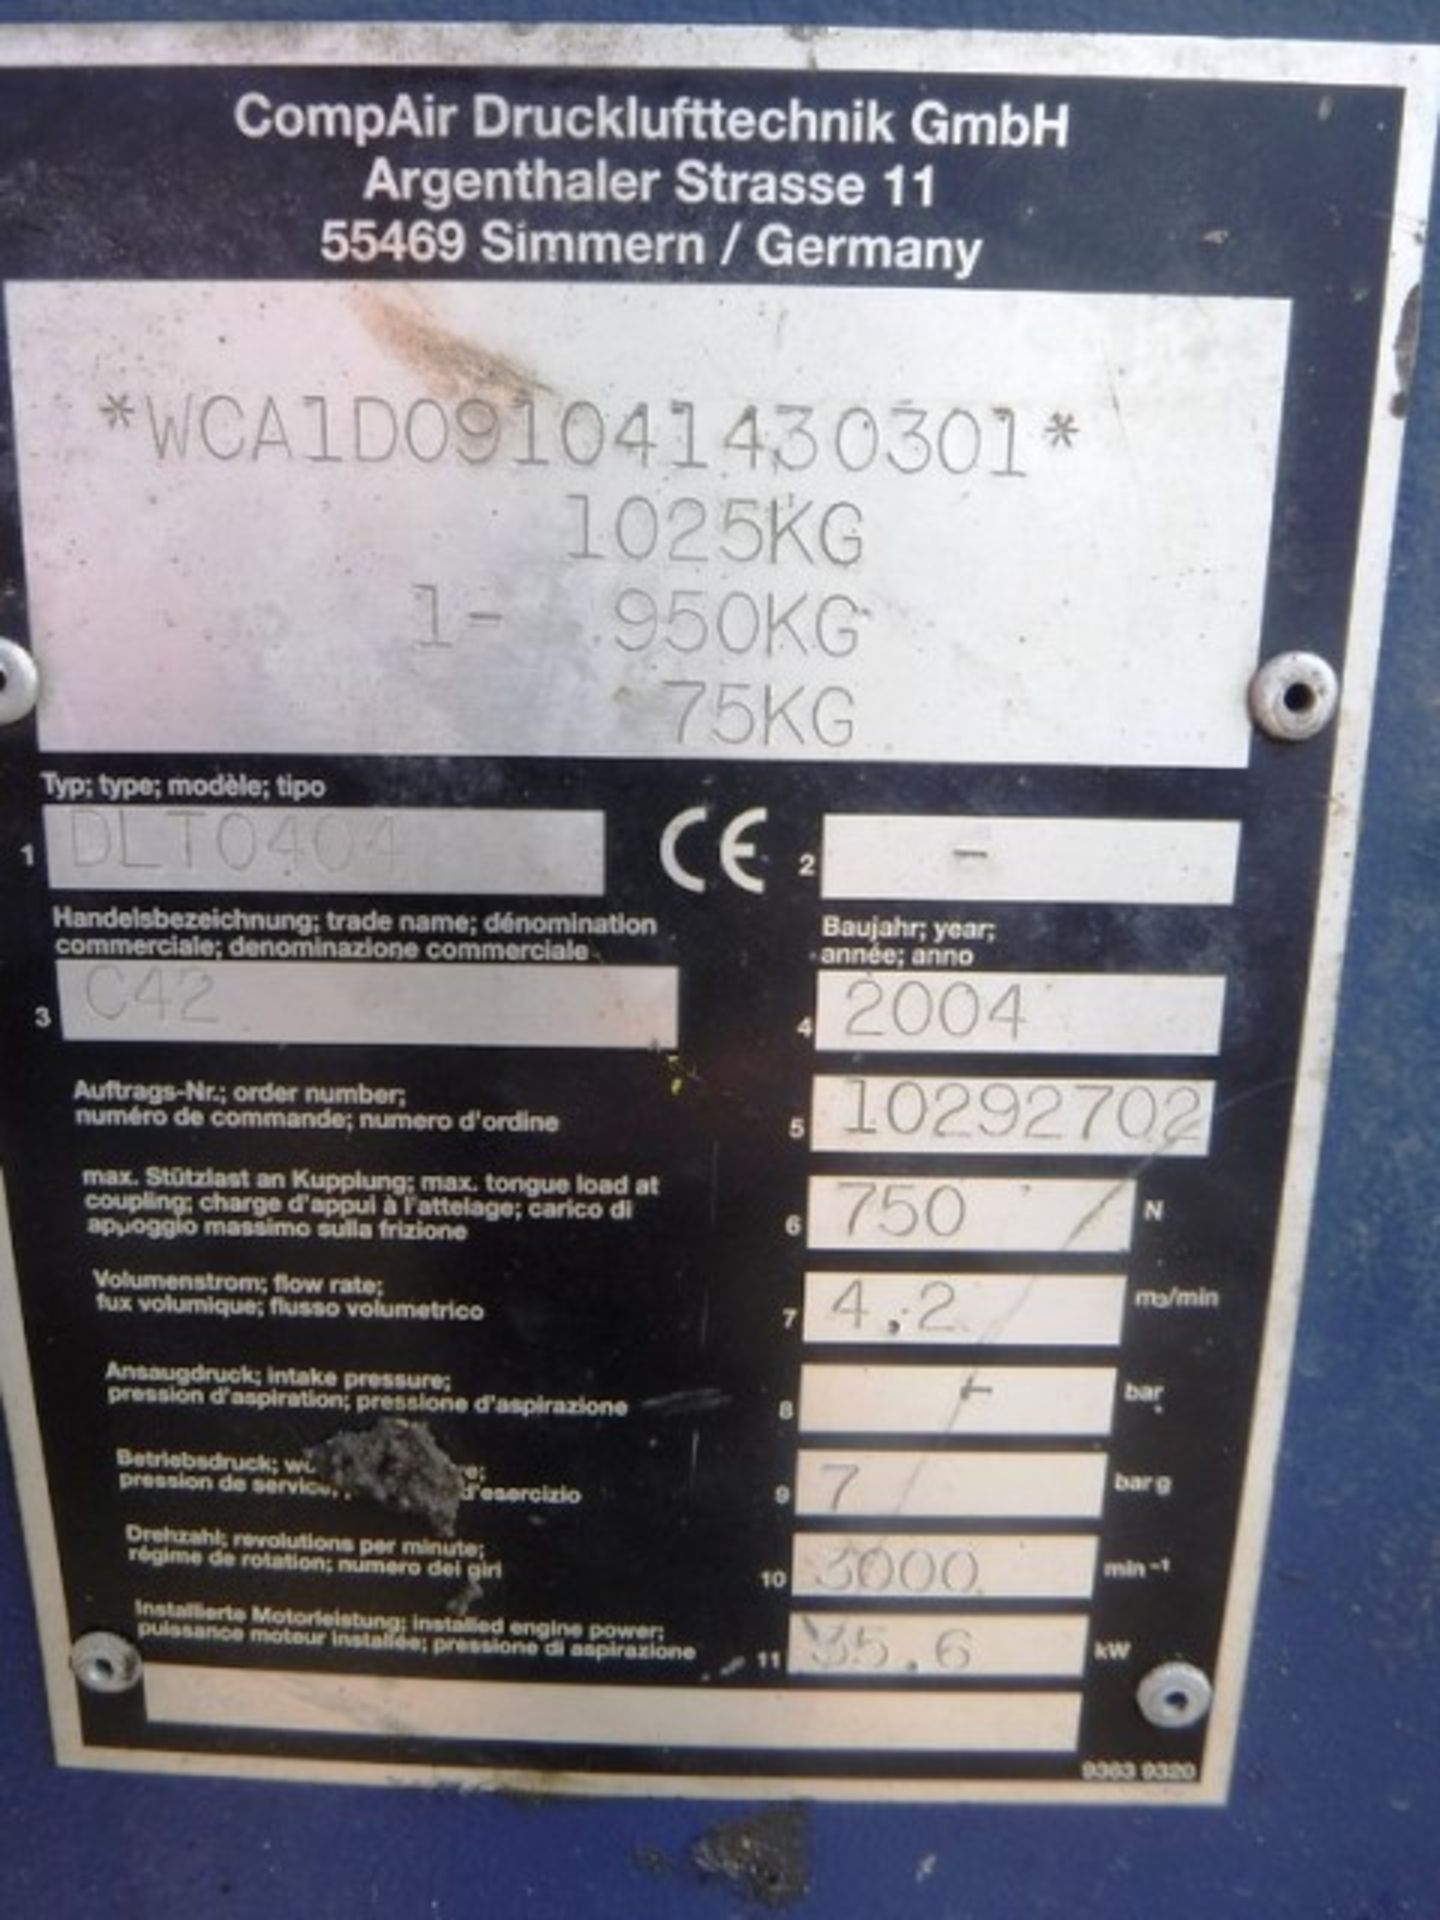 2004 COMPAIR C42 2T00Z DLT0404 compressor 2072hrs (not verified), - Image 6 of 6